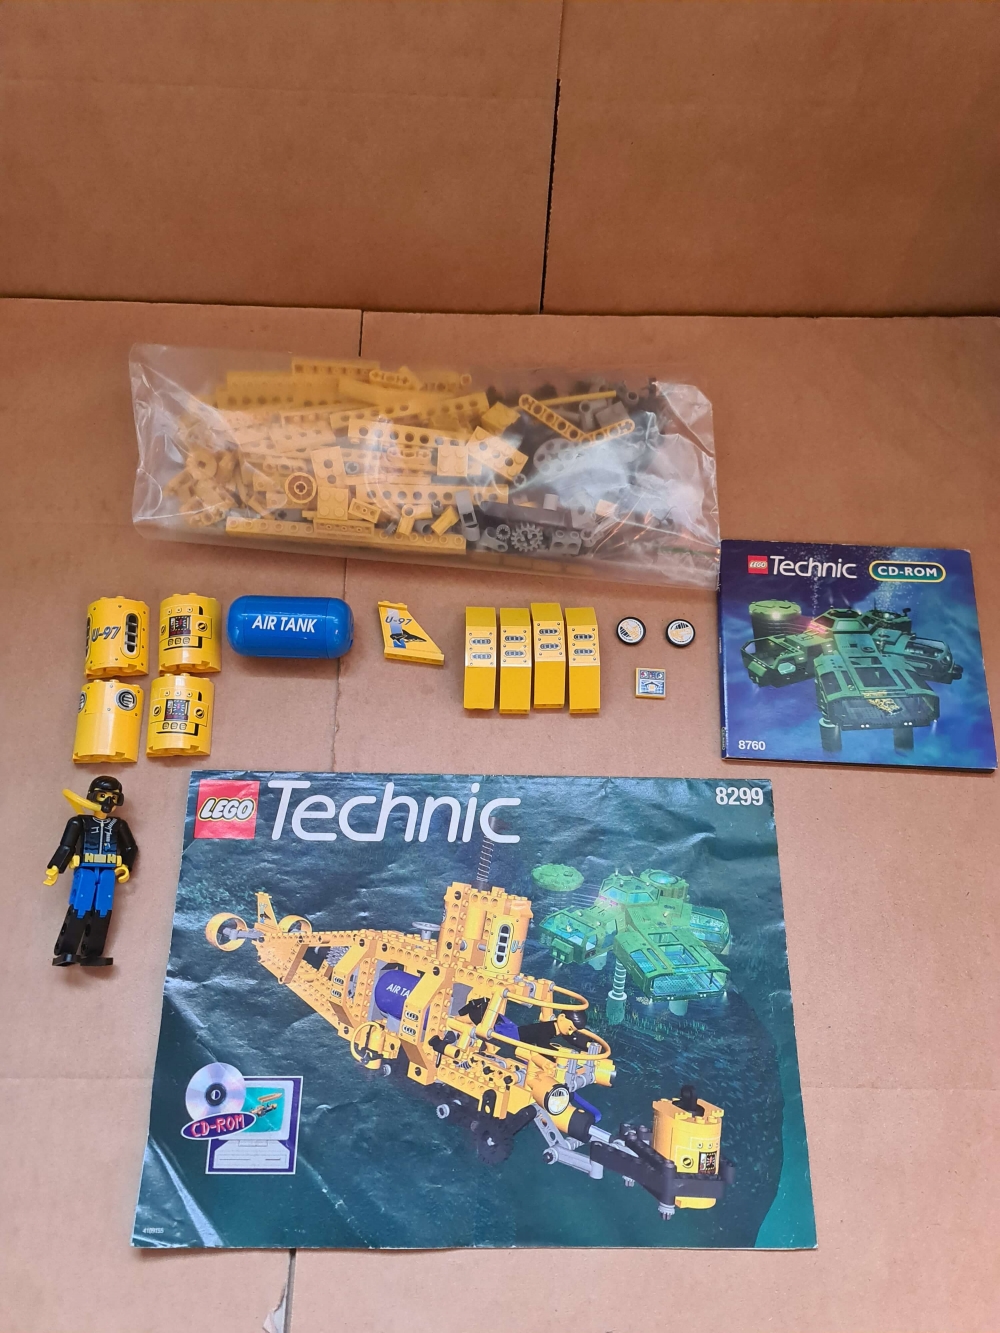 Sett 8299 fra Lego Technic serien.
Flott sett. 
Komplett med manual.